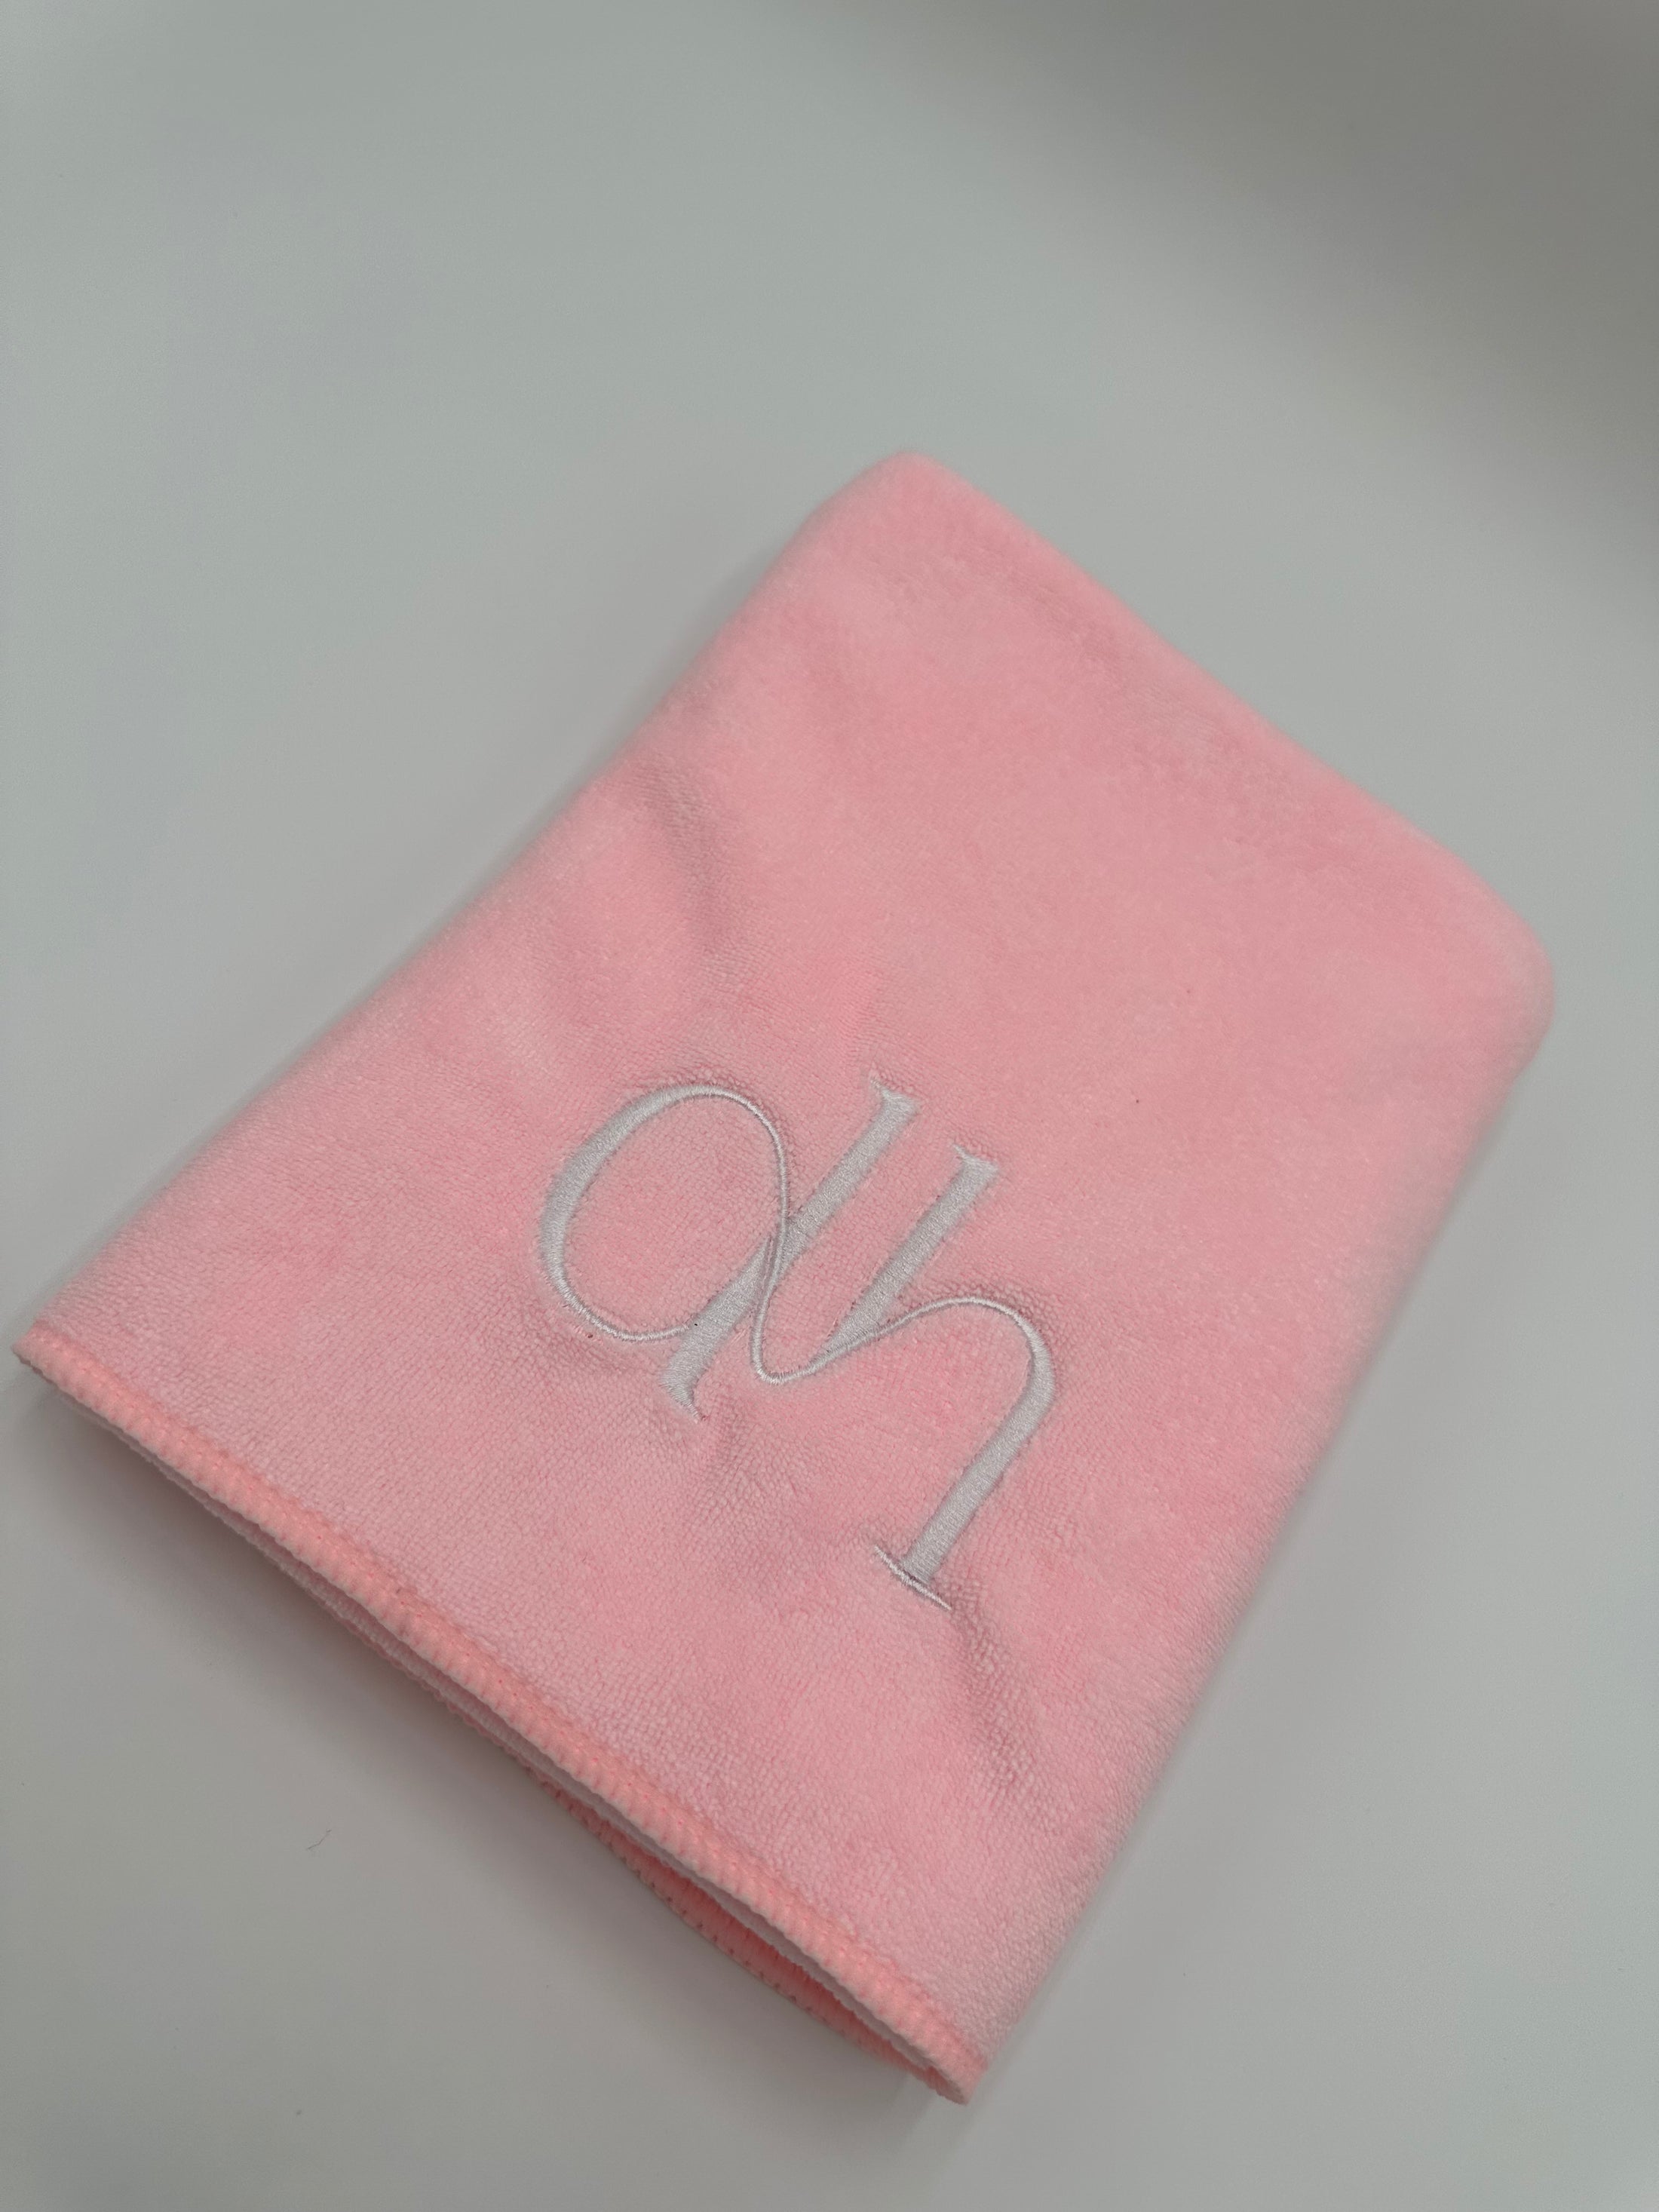 dh Luxury Branded Microfiber Doodle Towel - Premium Pet Drying Solution